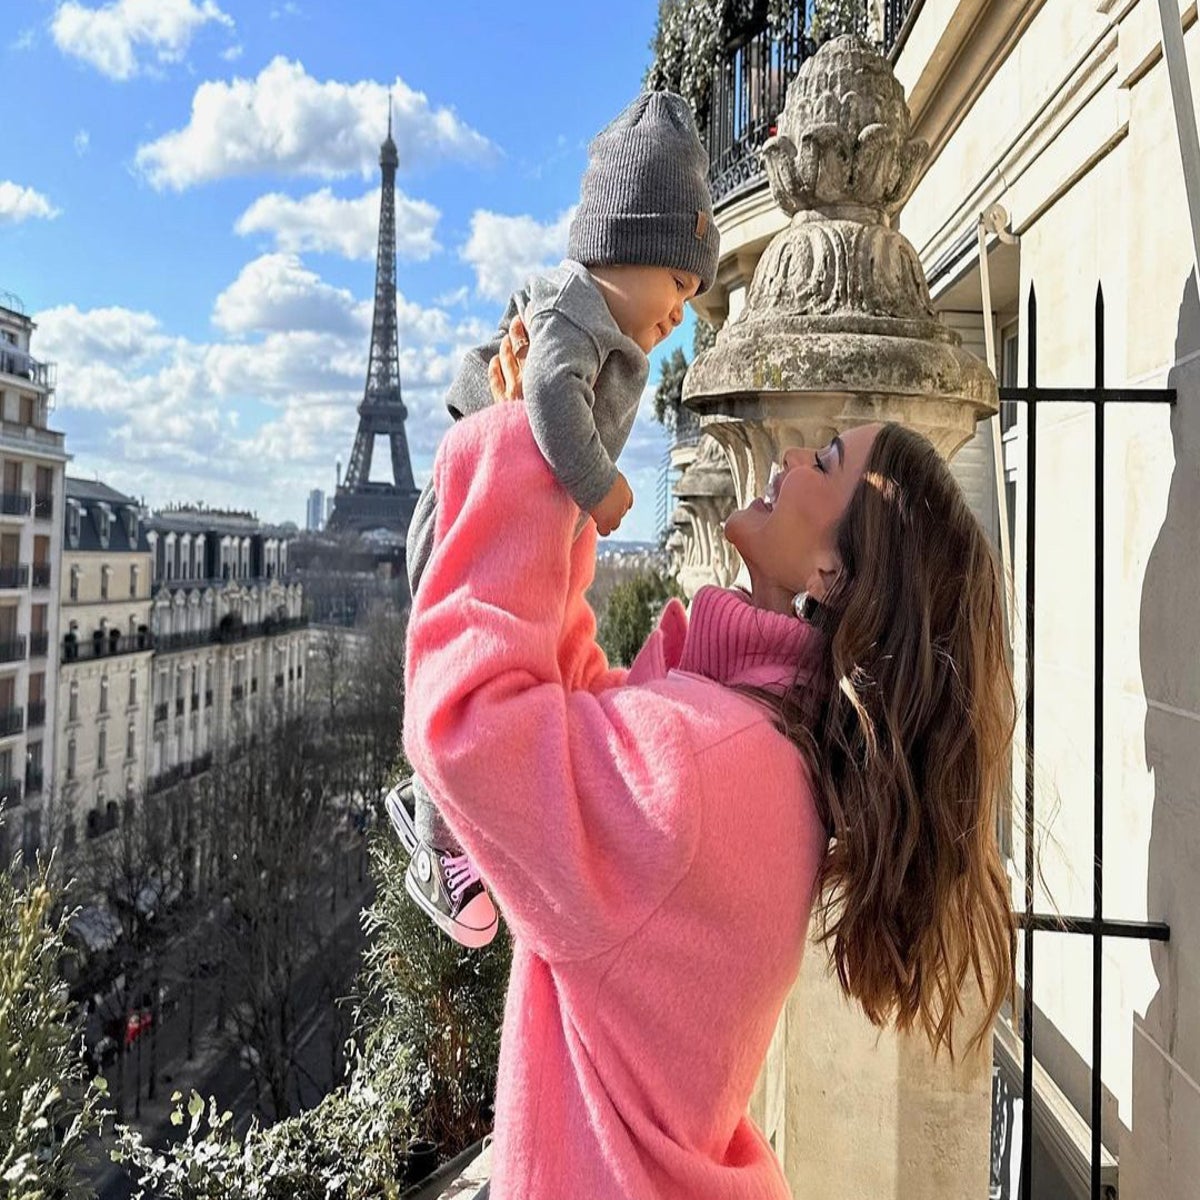 Influencer Camila Coelho slammed for posing with son on Paris